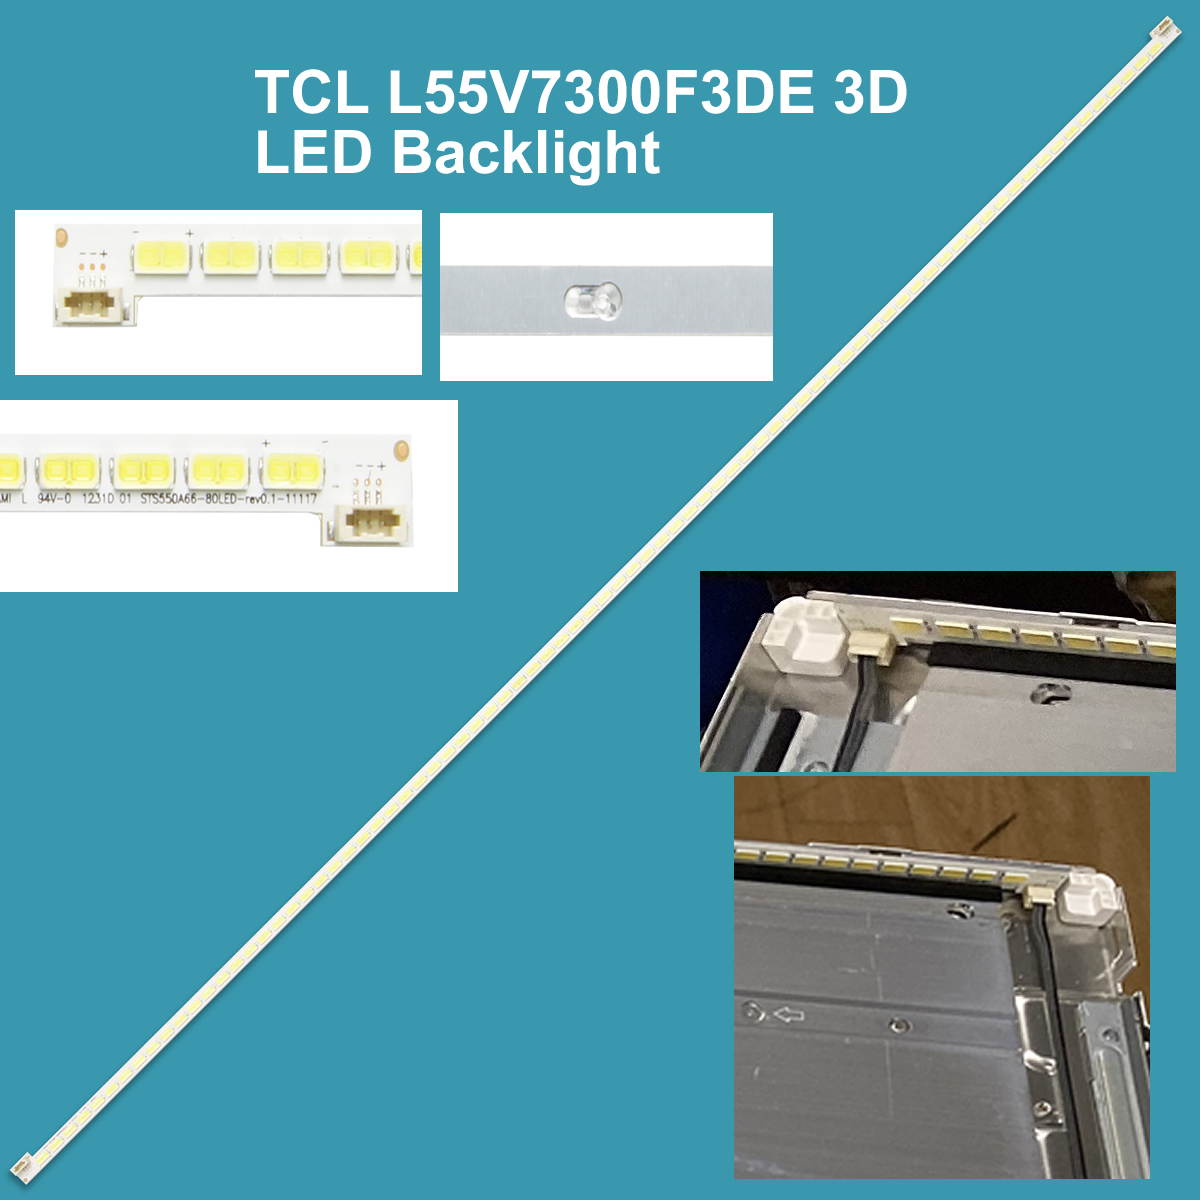 TCL L55V7300F3DE 3D LED backlight